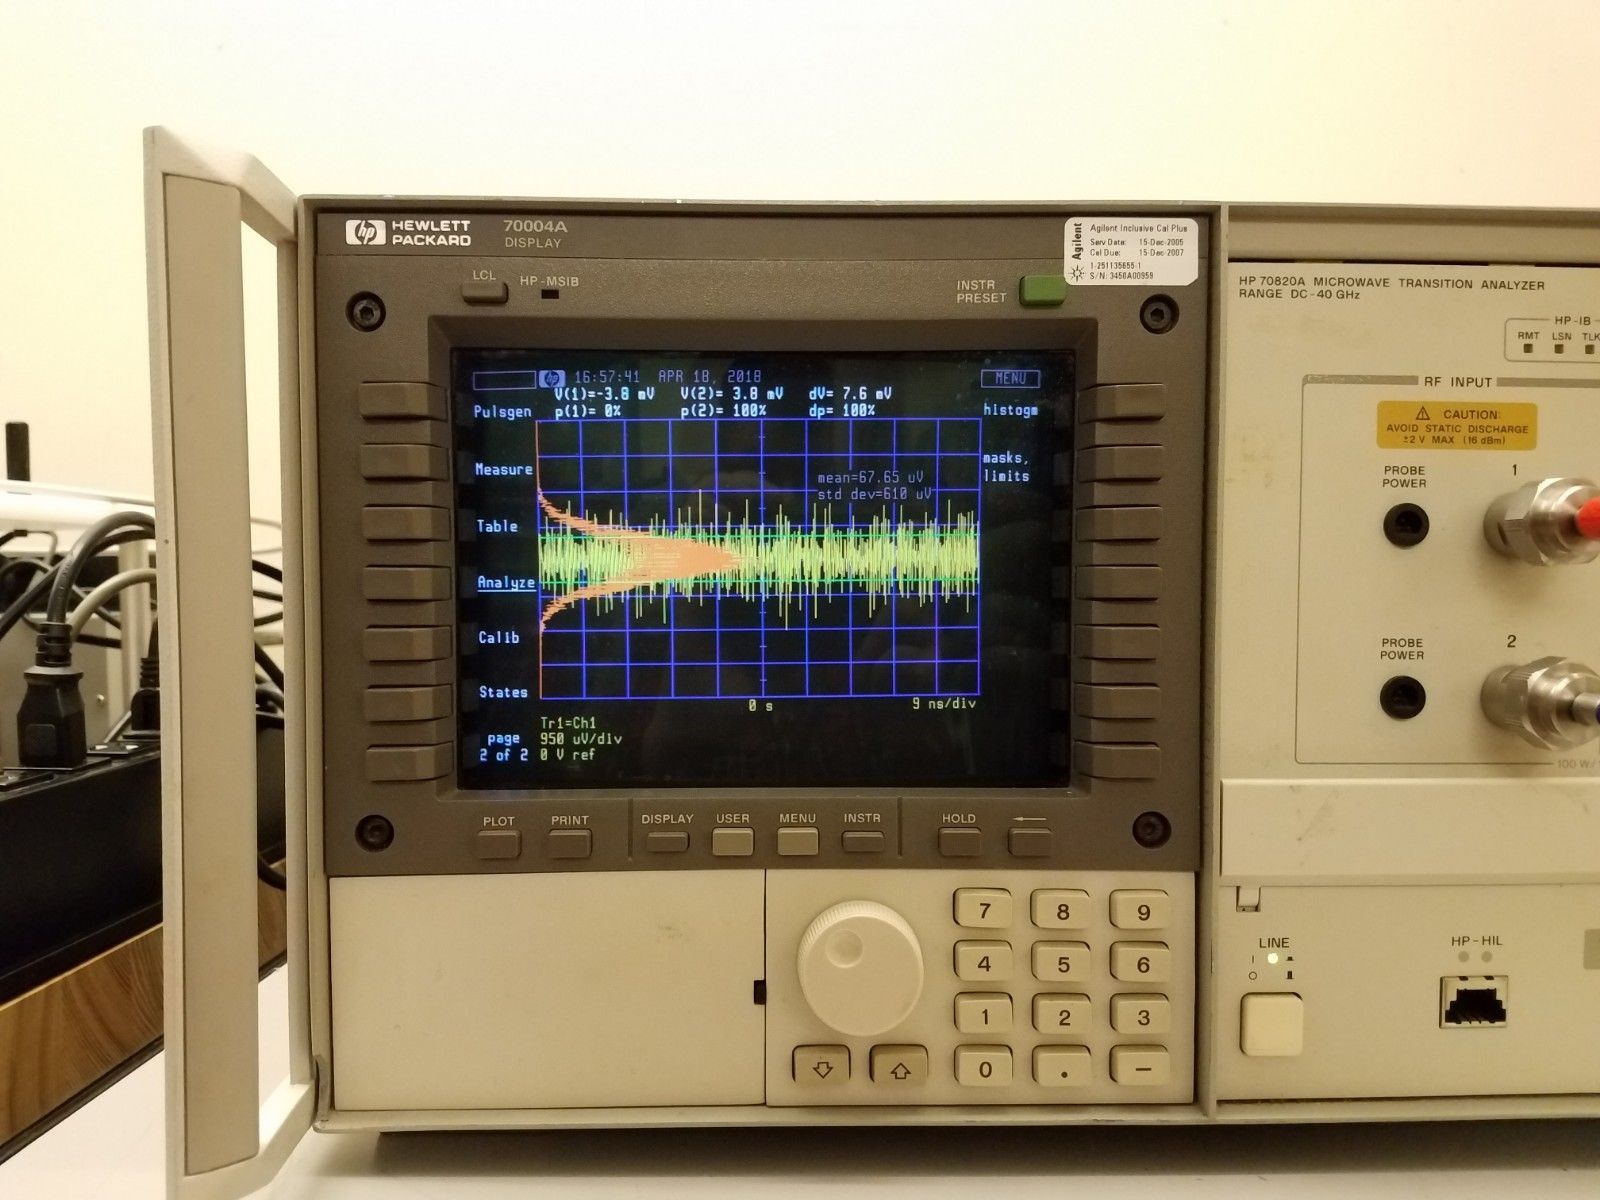 hp-70820a-dc-40-ghz-microwave-transition-analyzer-hp-70004a-keyboard-0.jpg